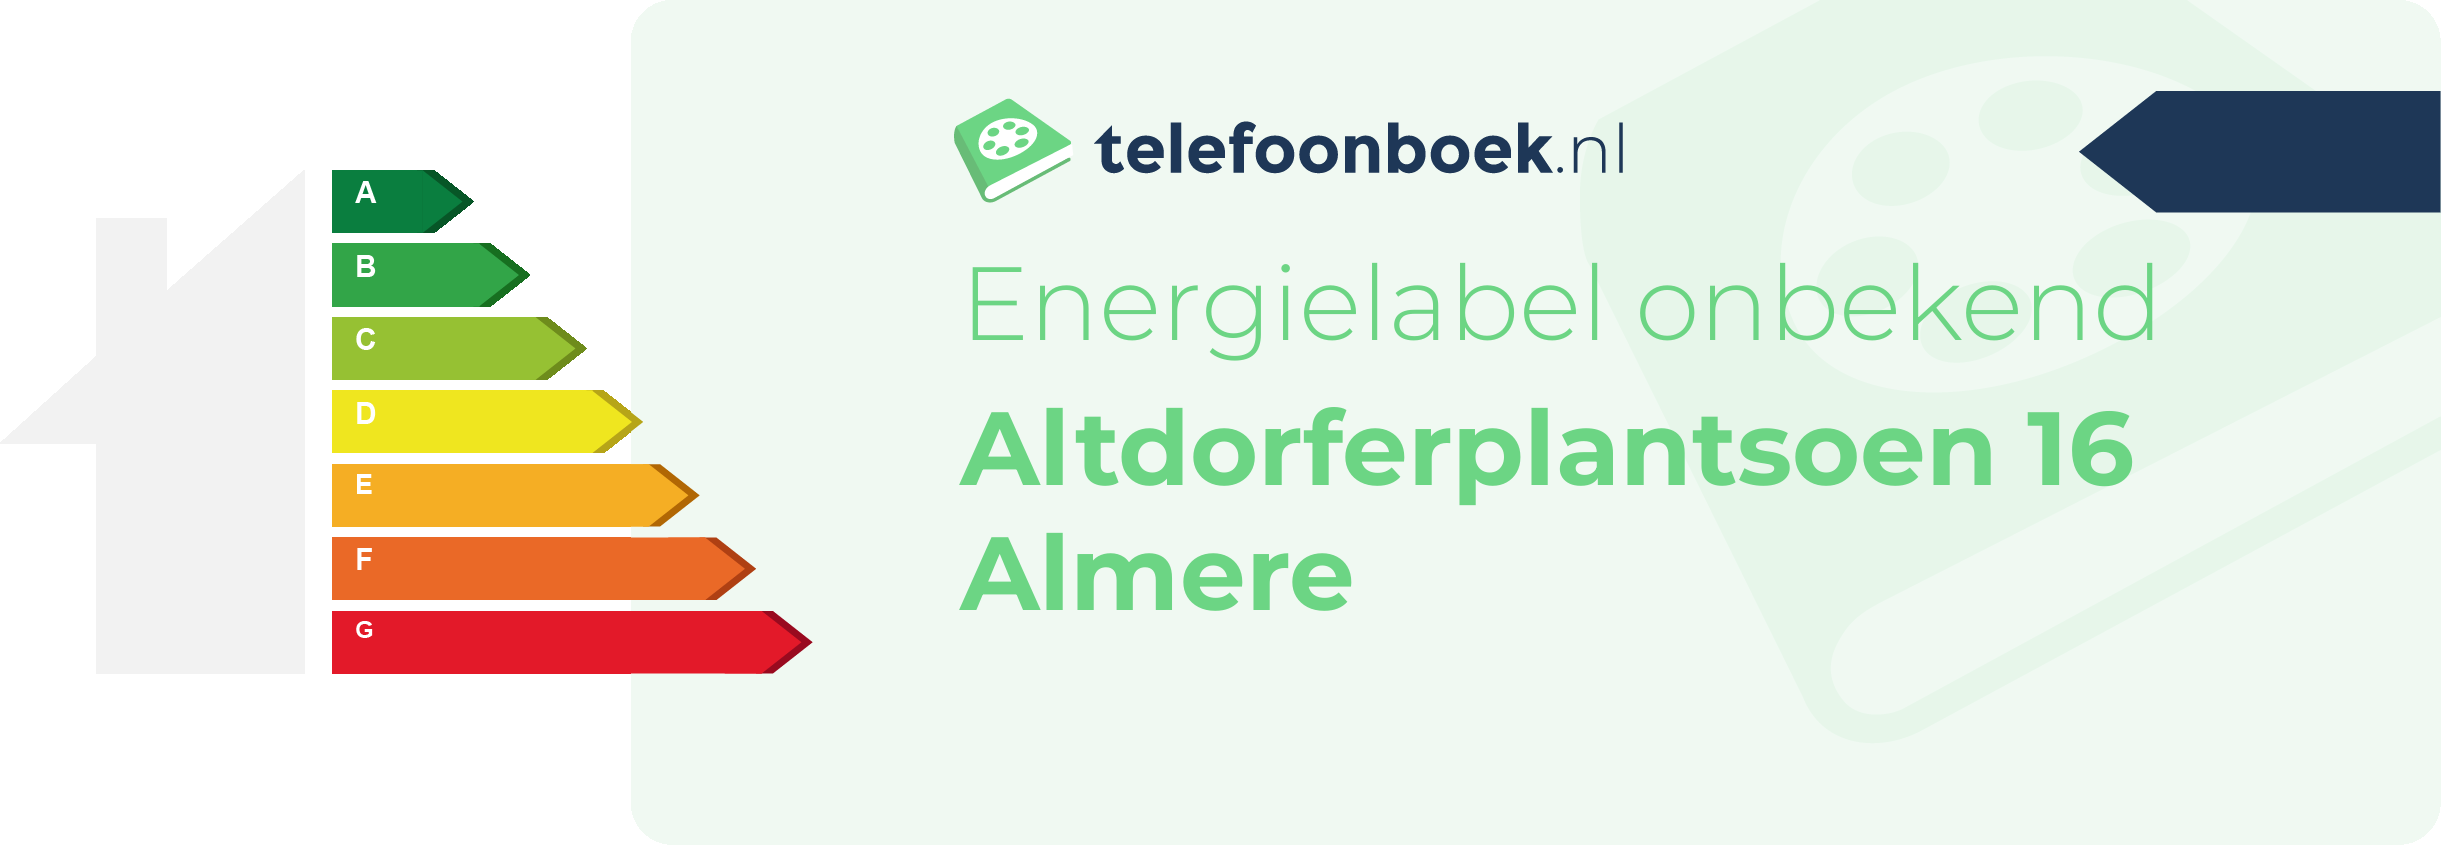 Energielabel Altdorferplantsoen 16 Almere